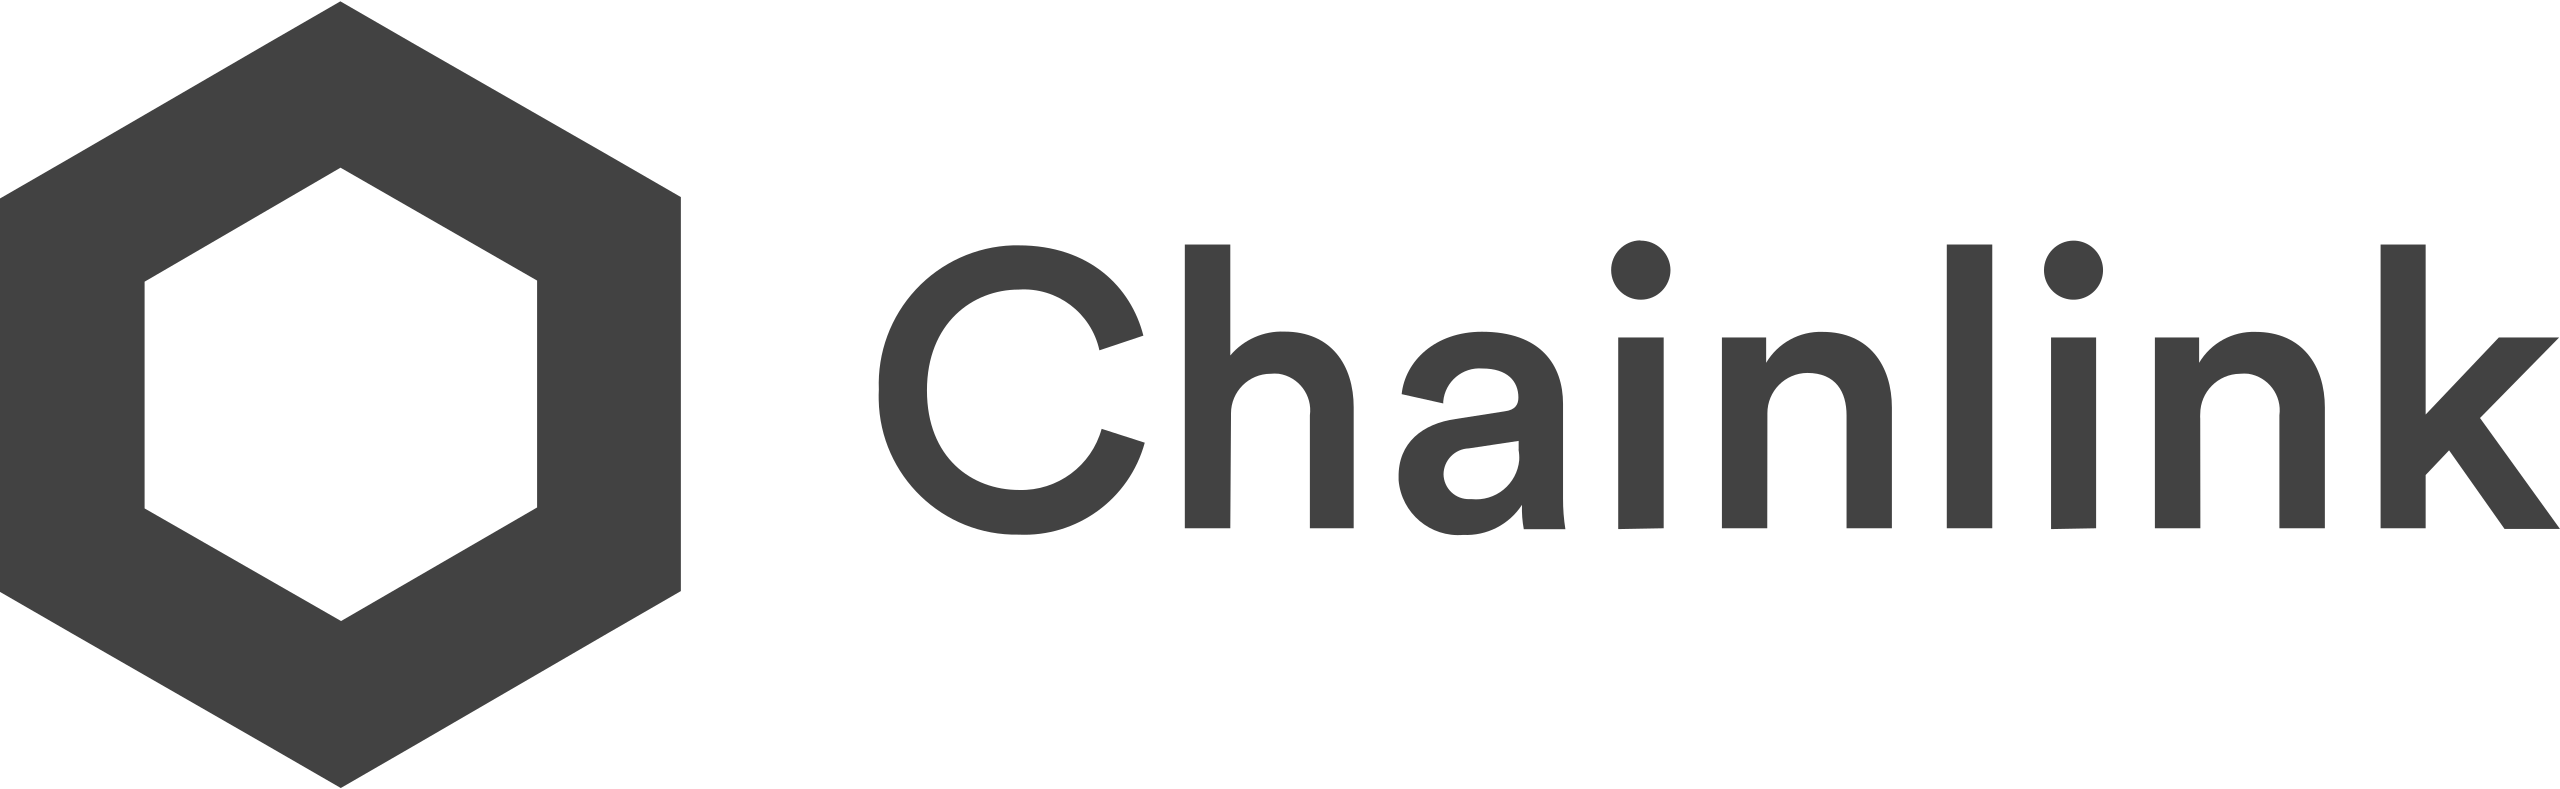 chainlink logo image